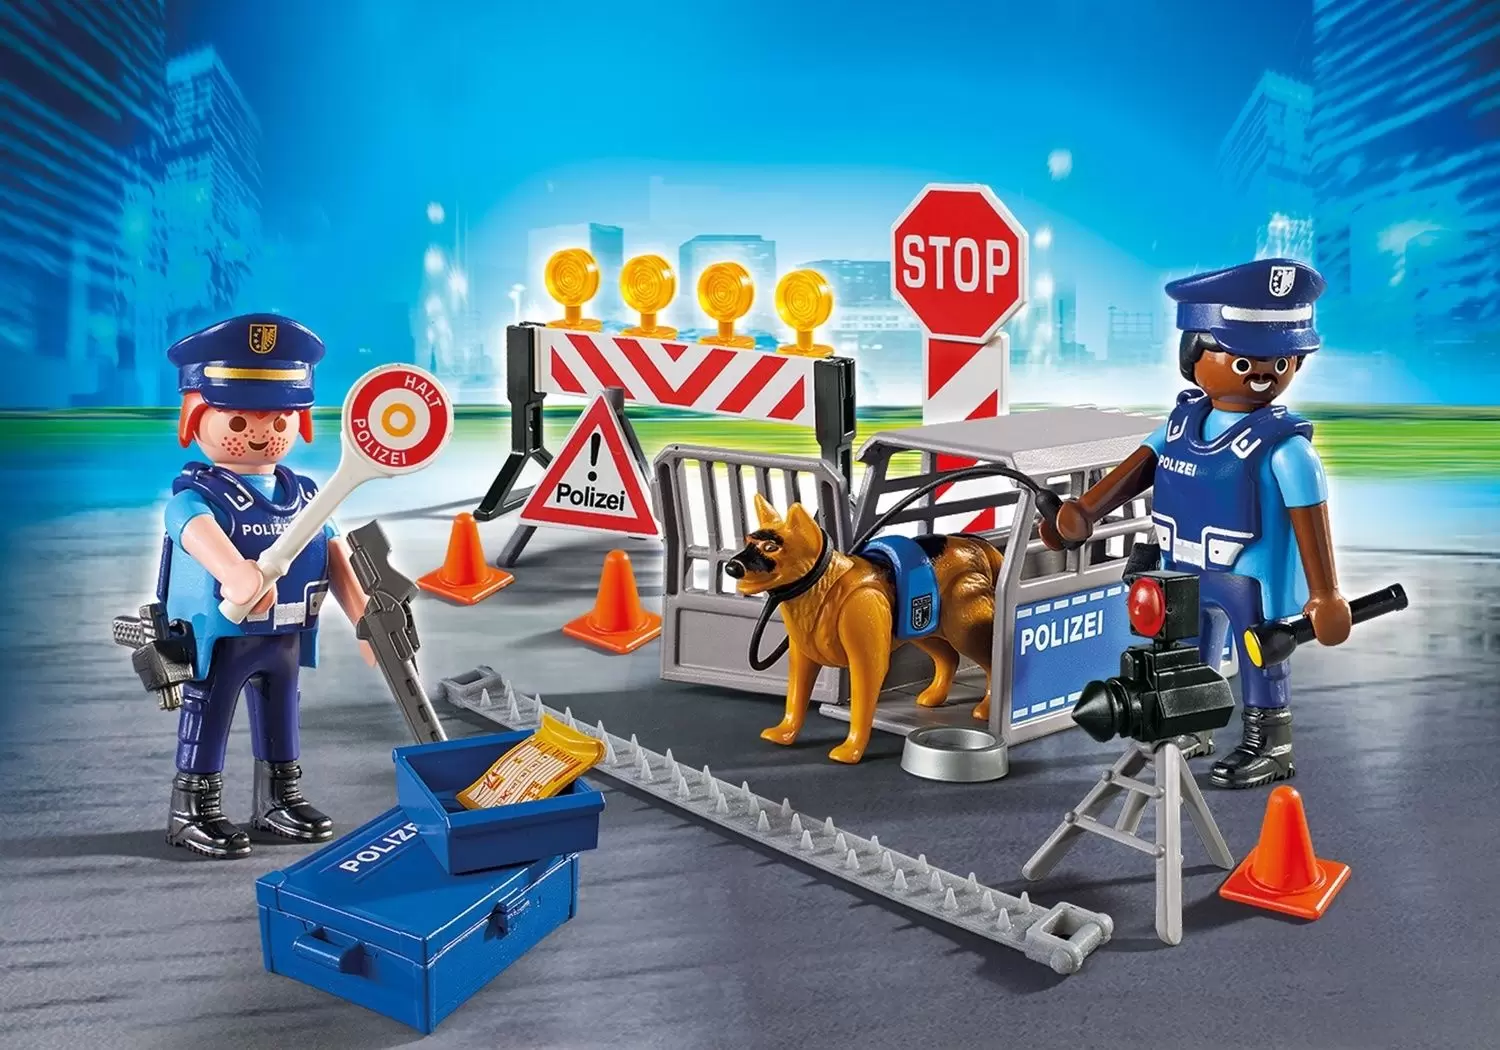 Police Playmobil - Police roadblock (Polizei)